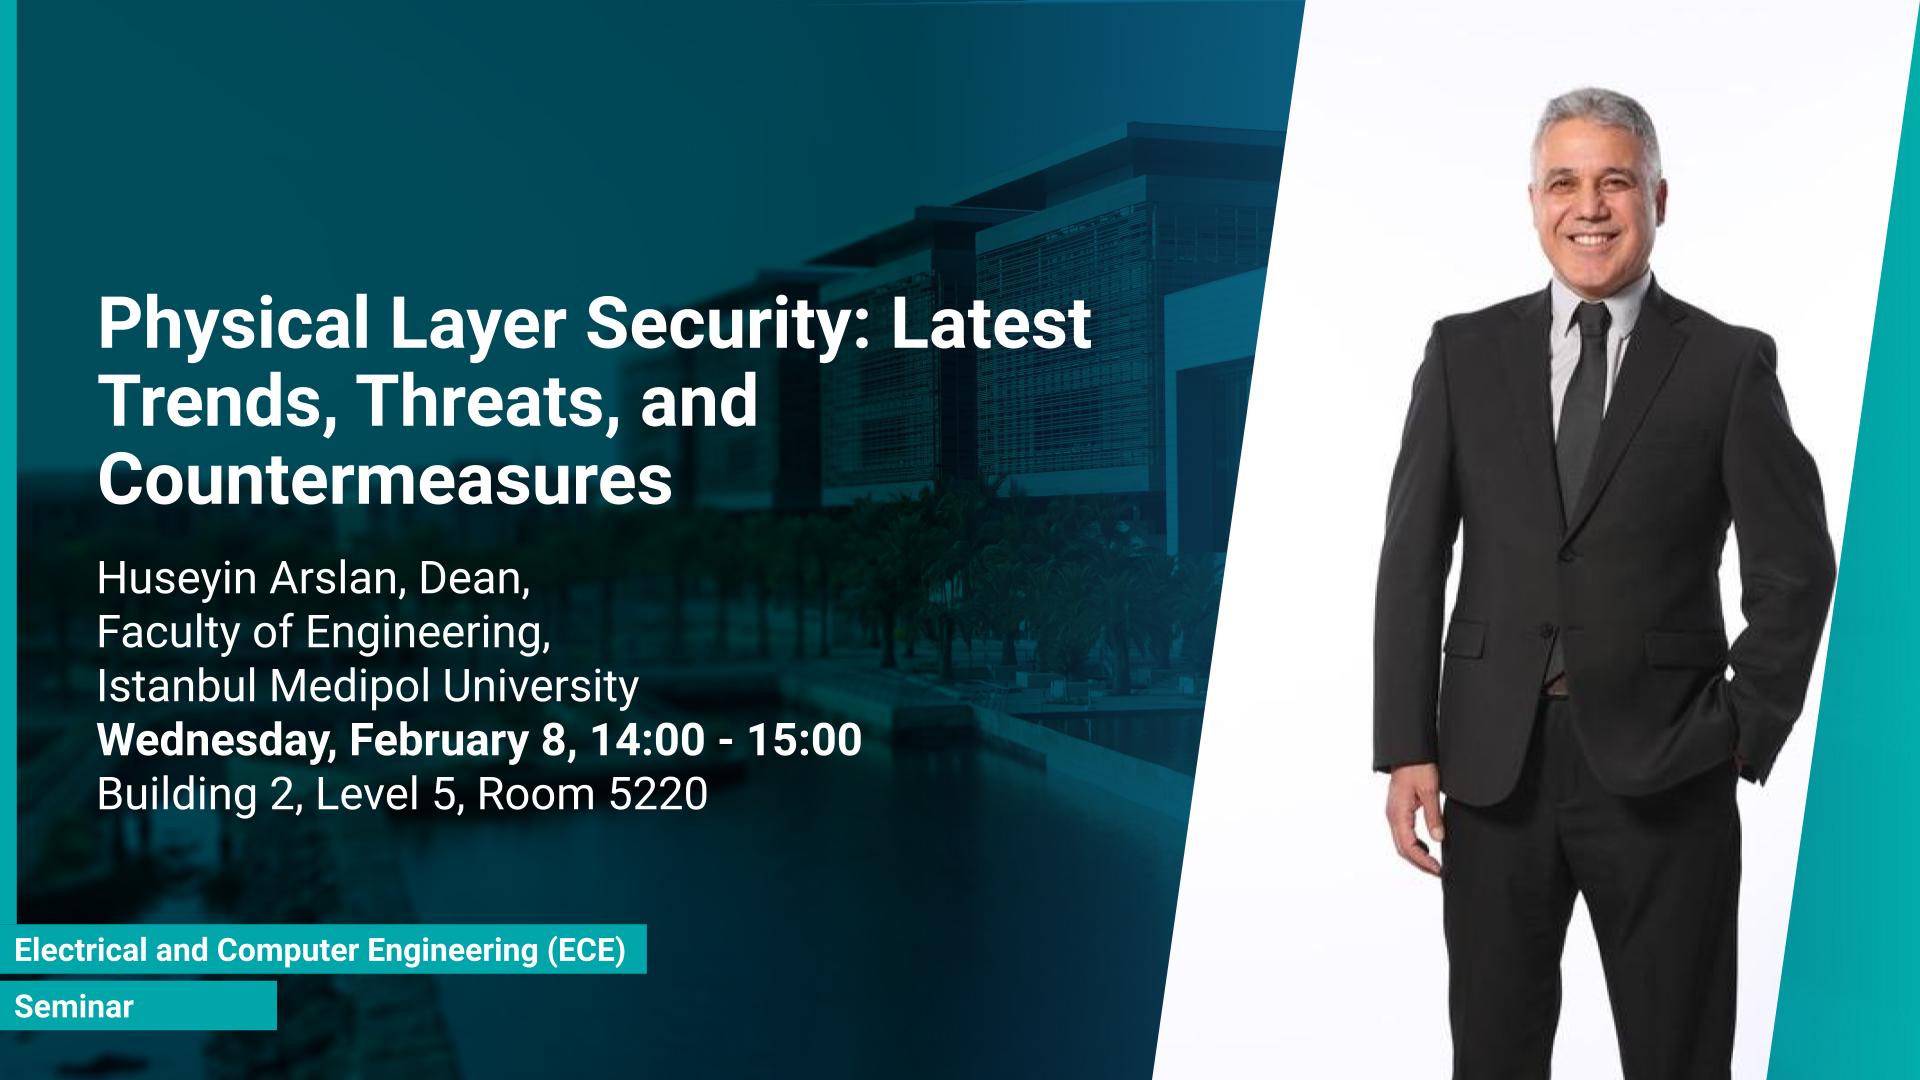 KAUST-CEMSE-ECE-Seminar-Huseyin-Arslan-Physical Layer Security Latest Trends Threats and Countermeasures.jpg